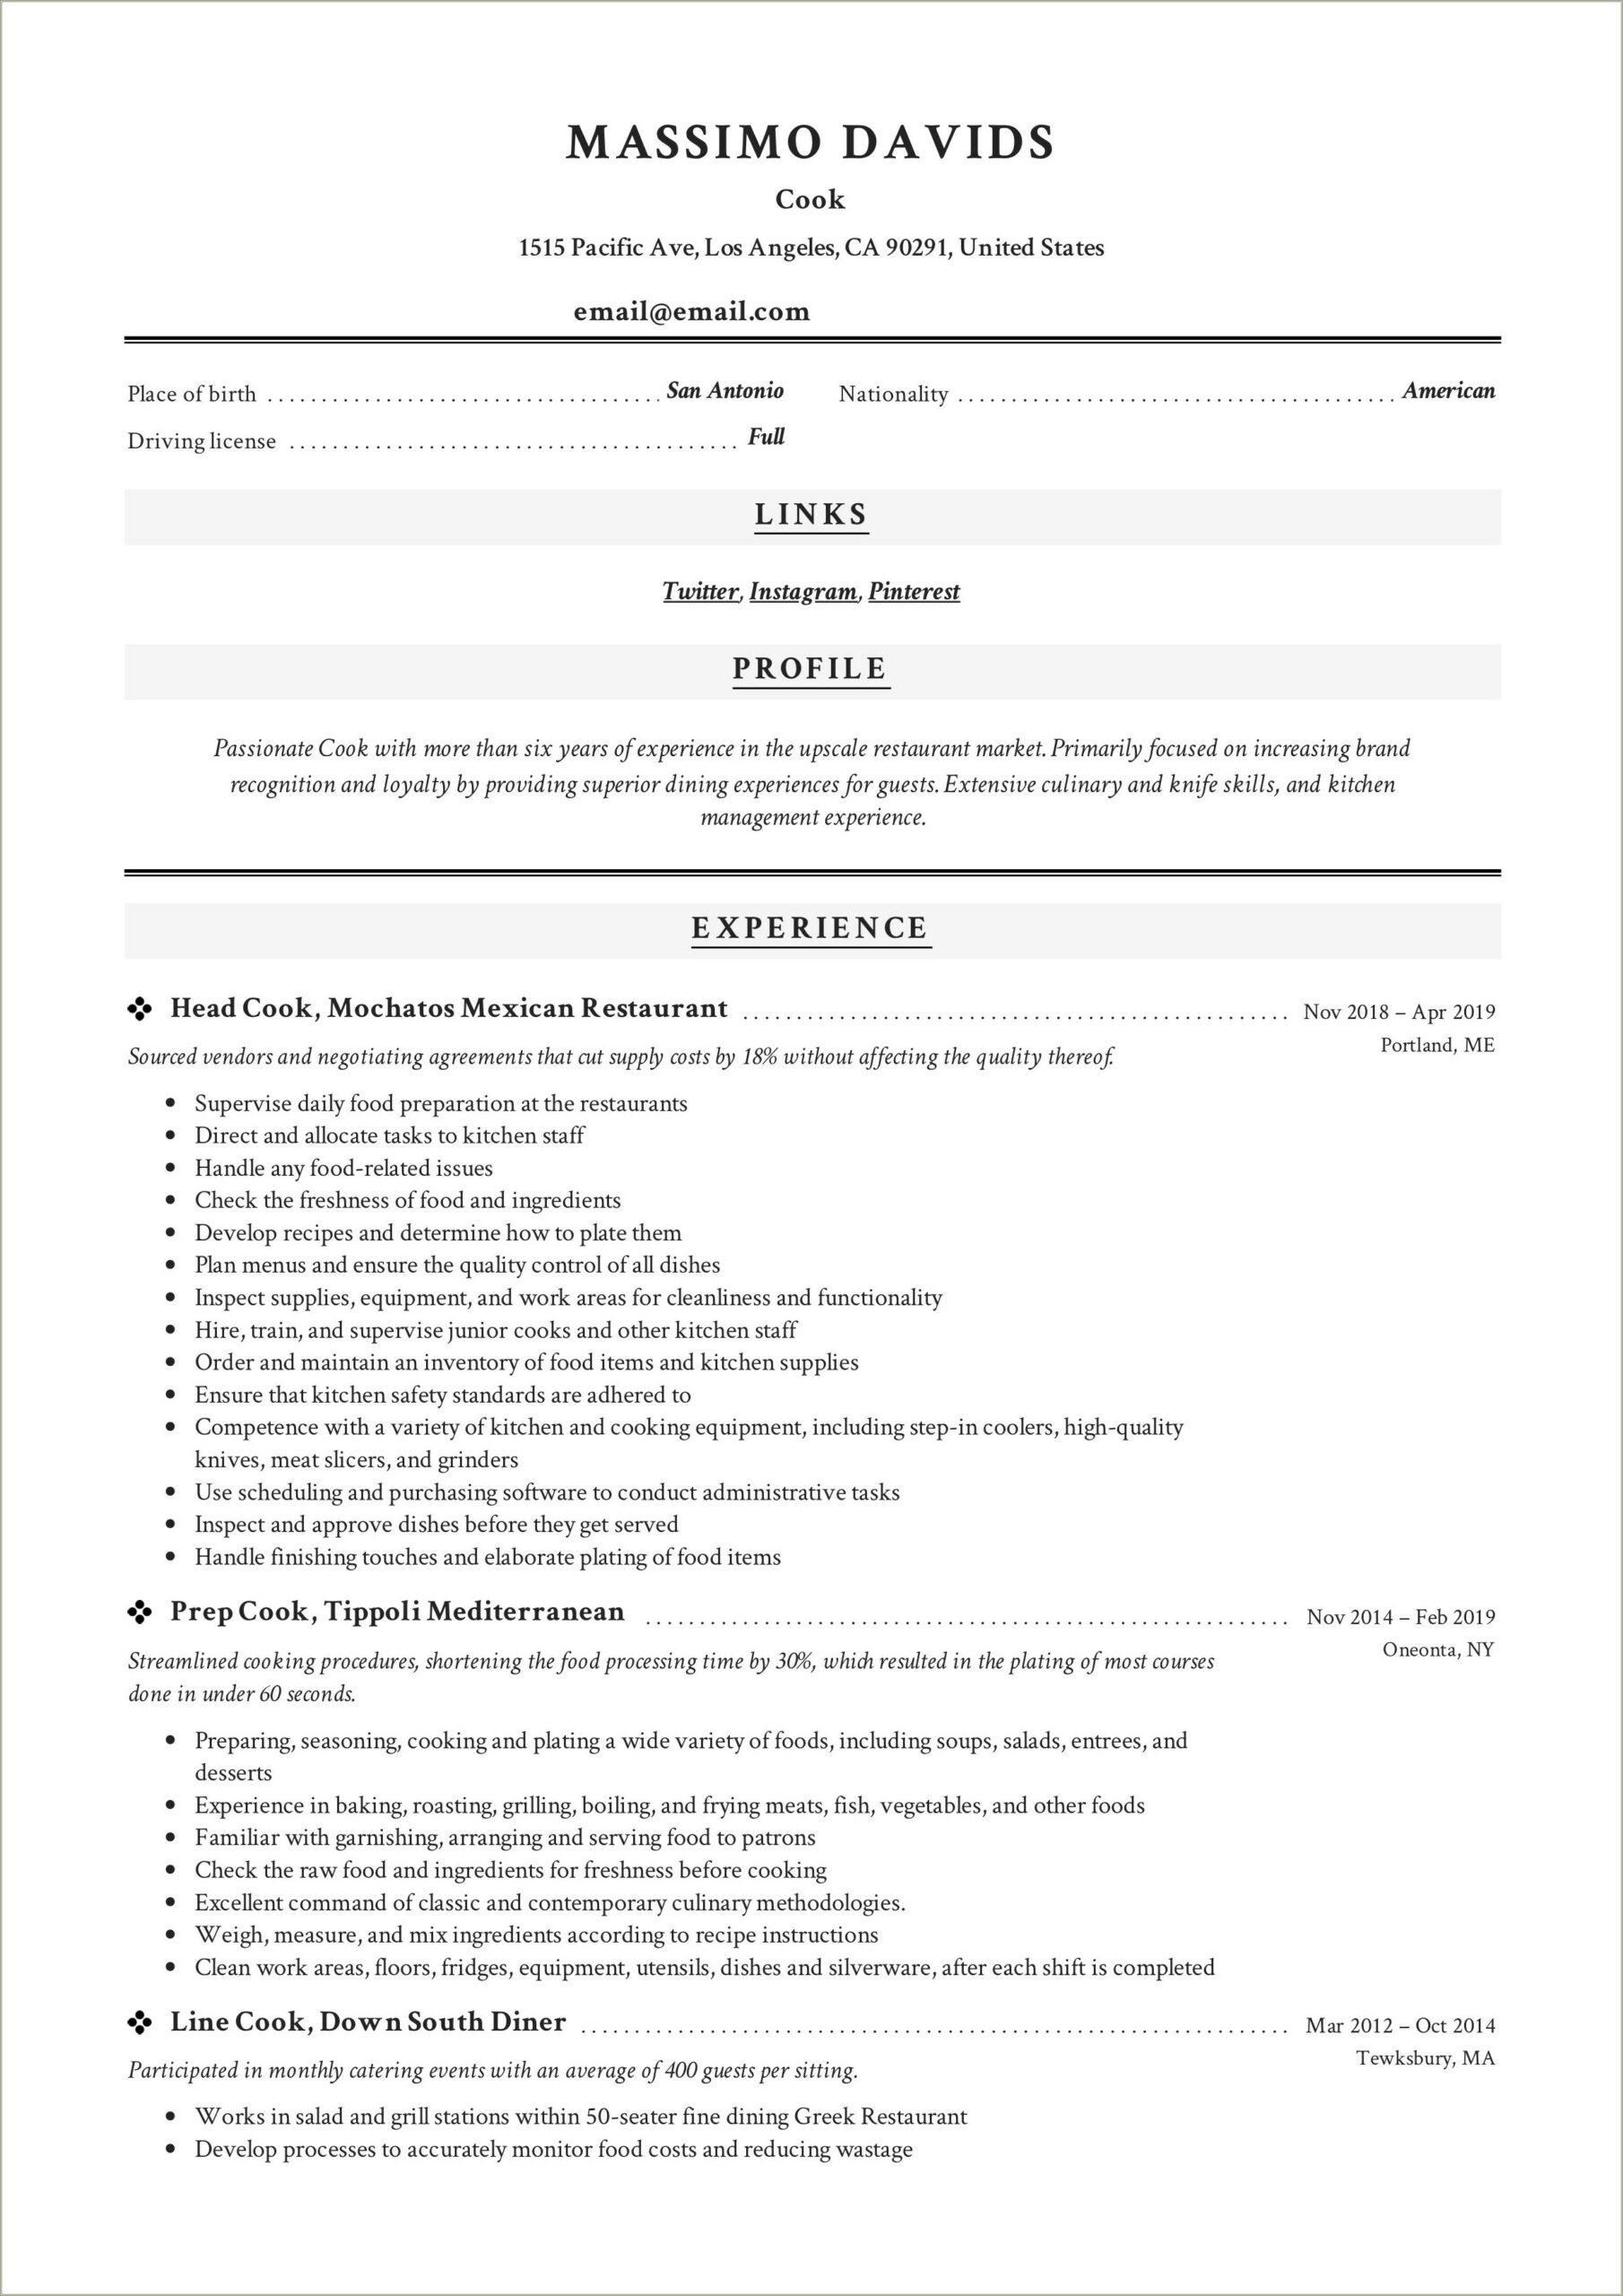 Job Description For Prep Cook Resume